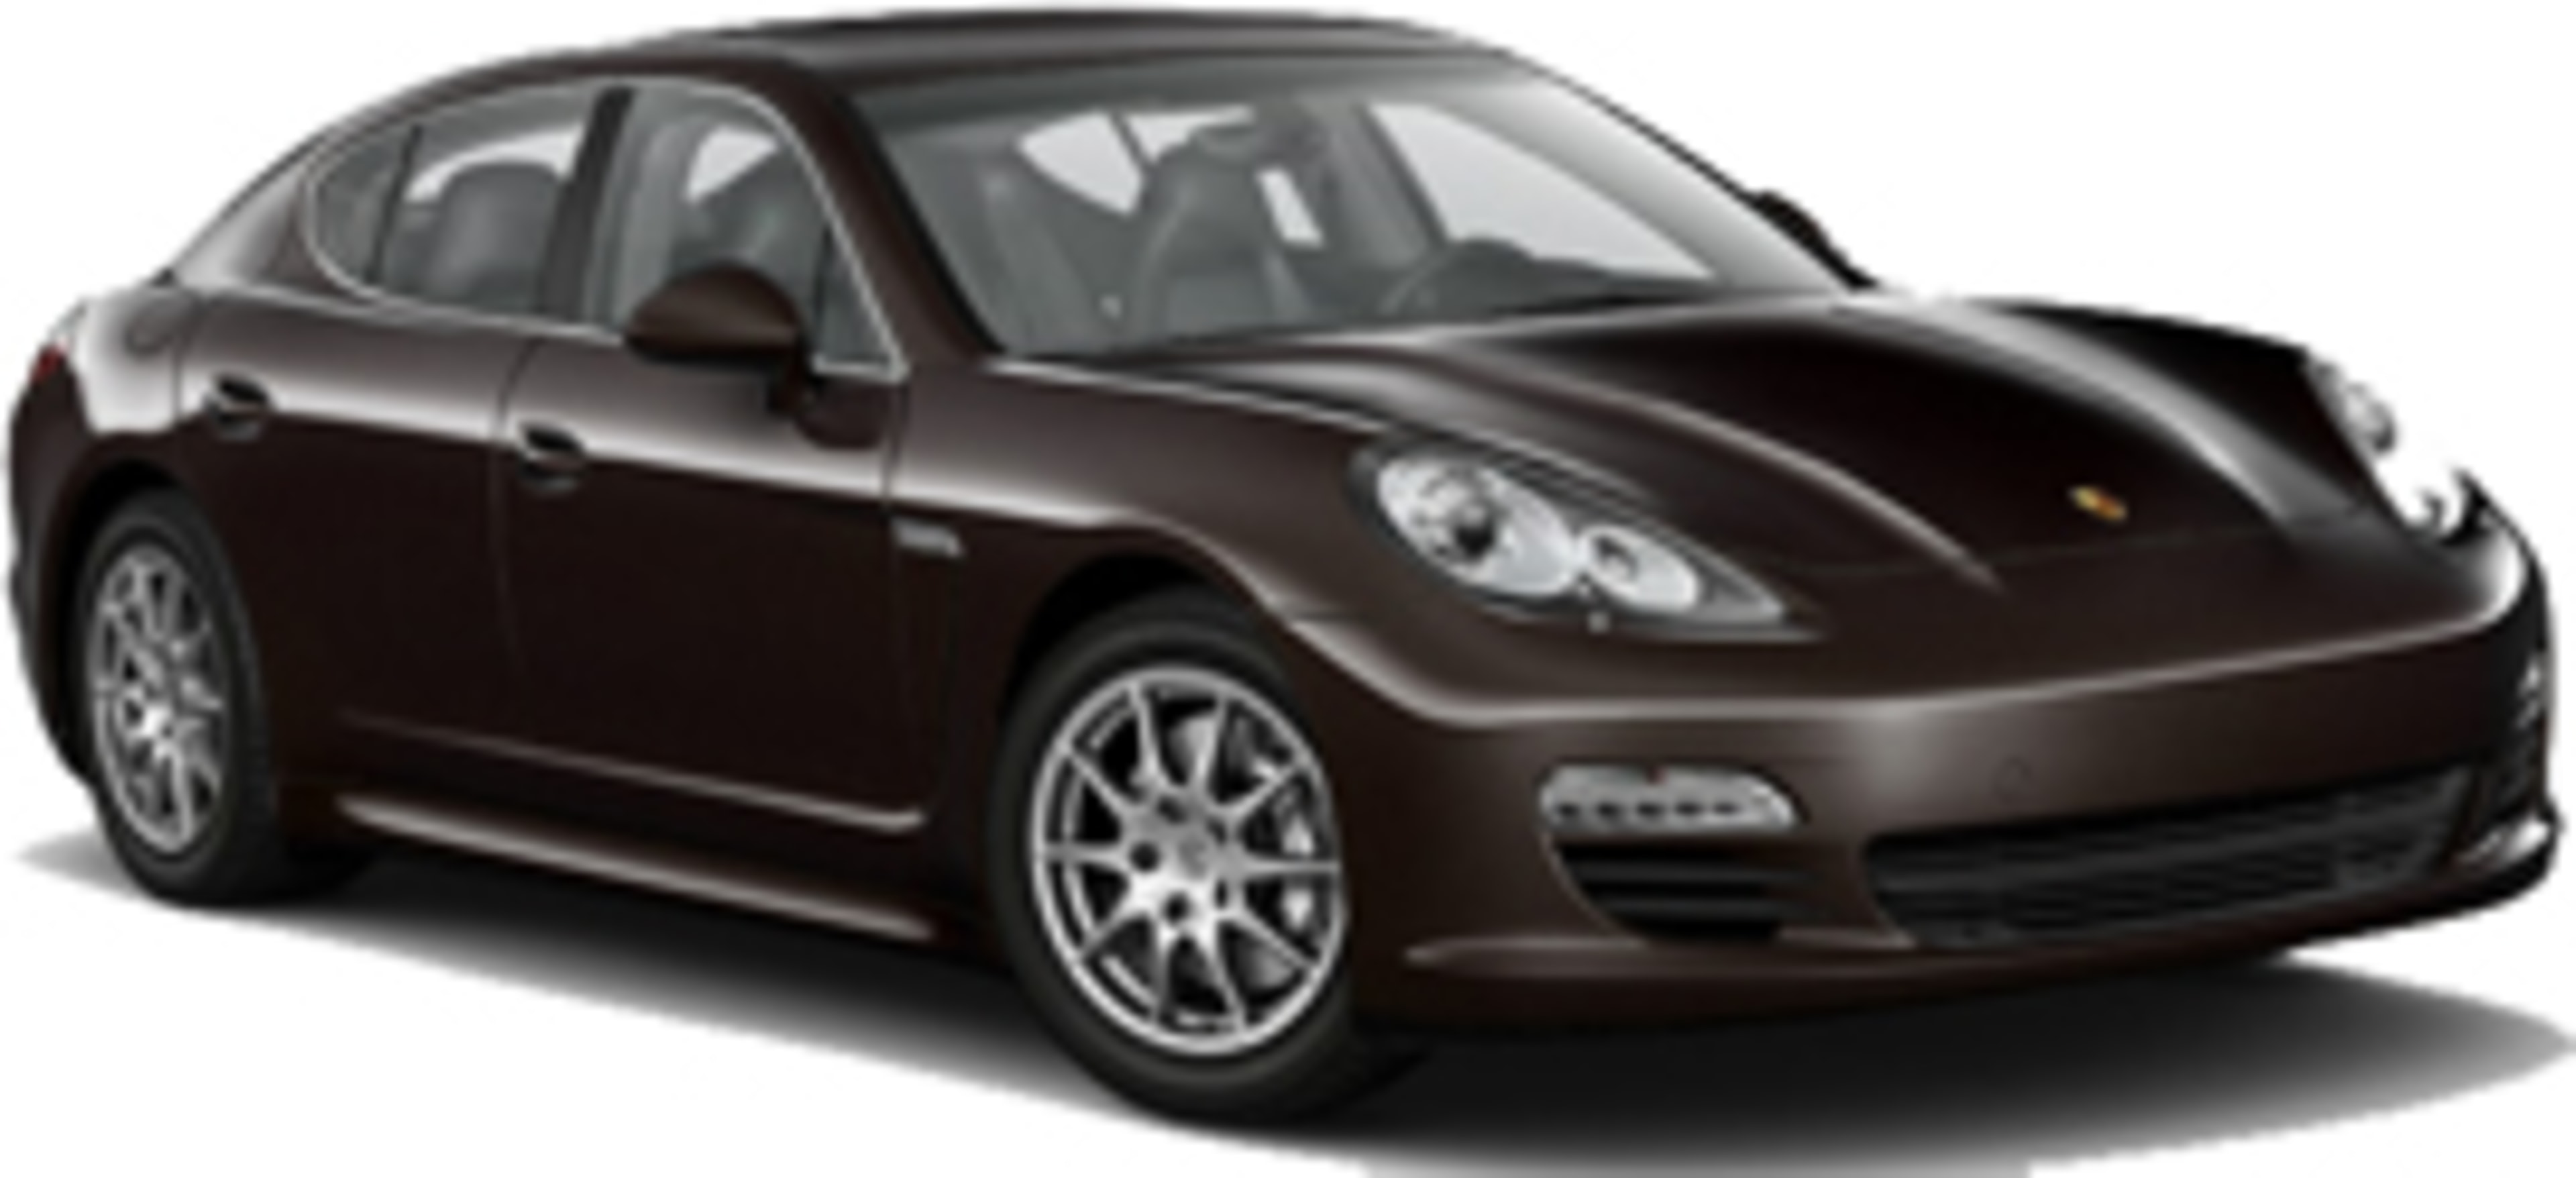 2013 Porsche Panamera Service and Repair Manual